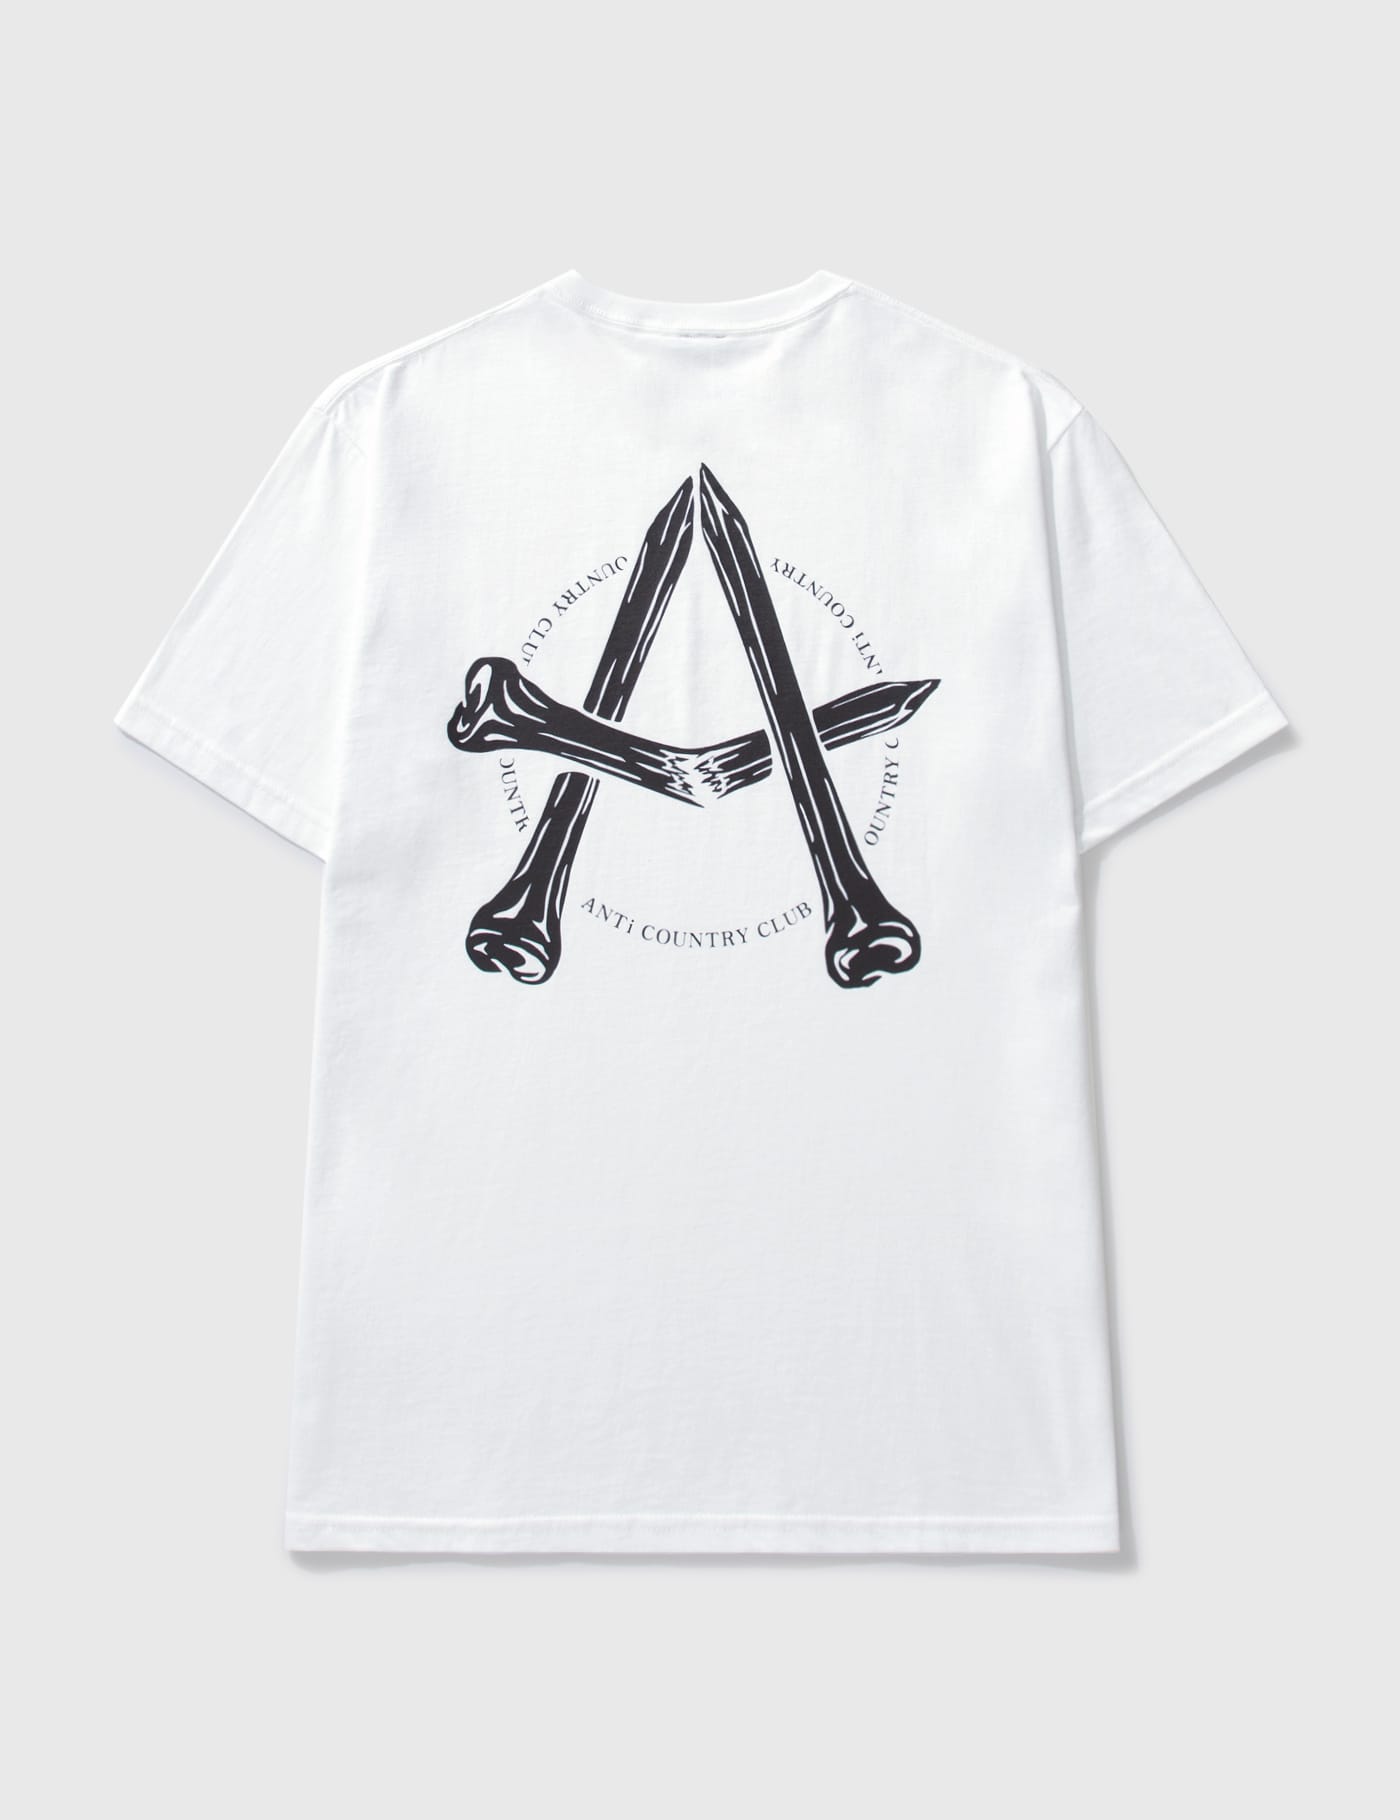 ANTi COUNTRY CLUB tシャツ - Tシャツ/カットソー(半袖/袖なし)